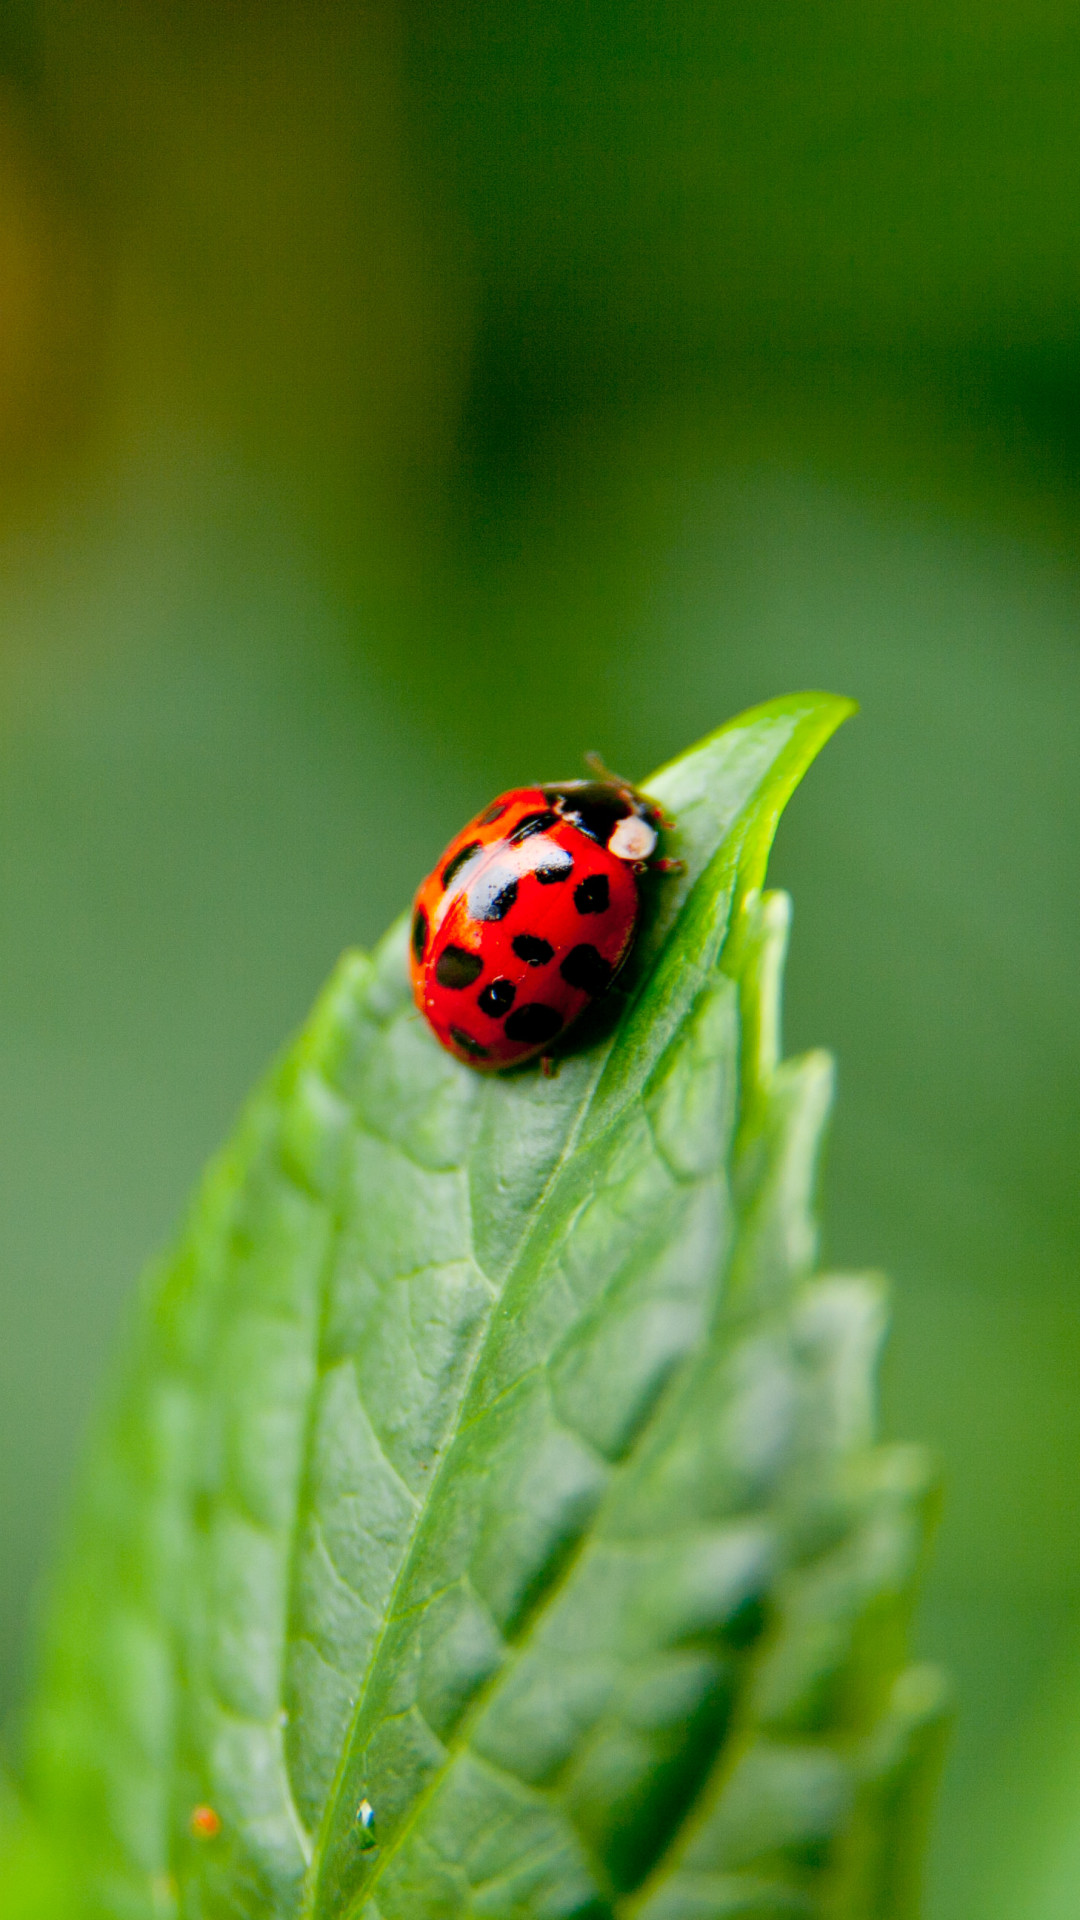 bug wallpaper,ladybug,insect,macro photography,beetle,close up